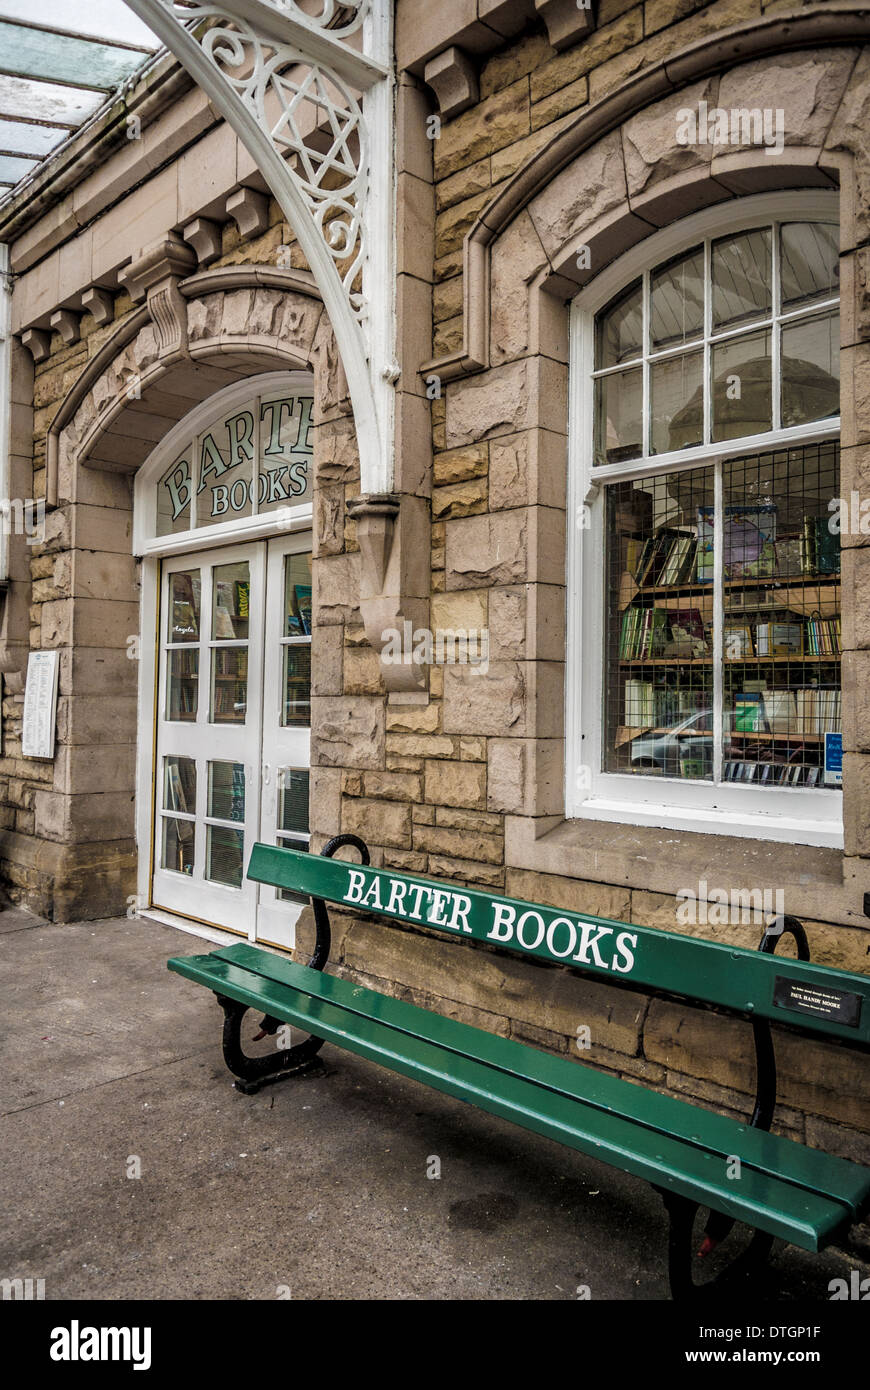 Barter Books, Alnwick, Northumberland, UK.ex Stock Photo